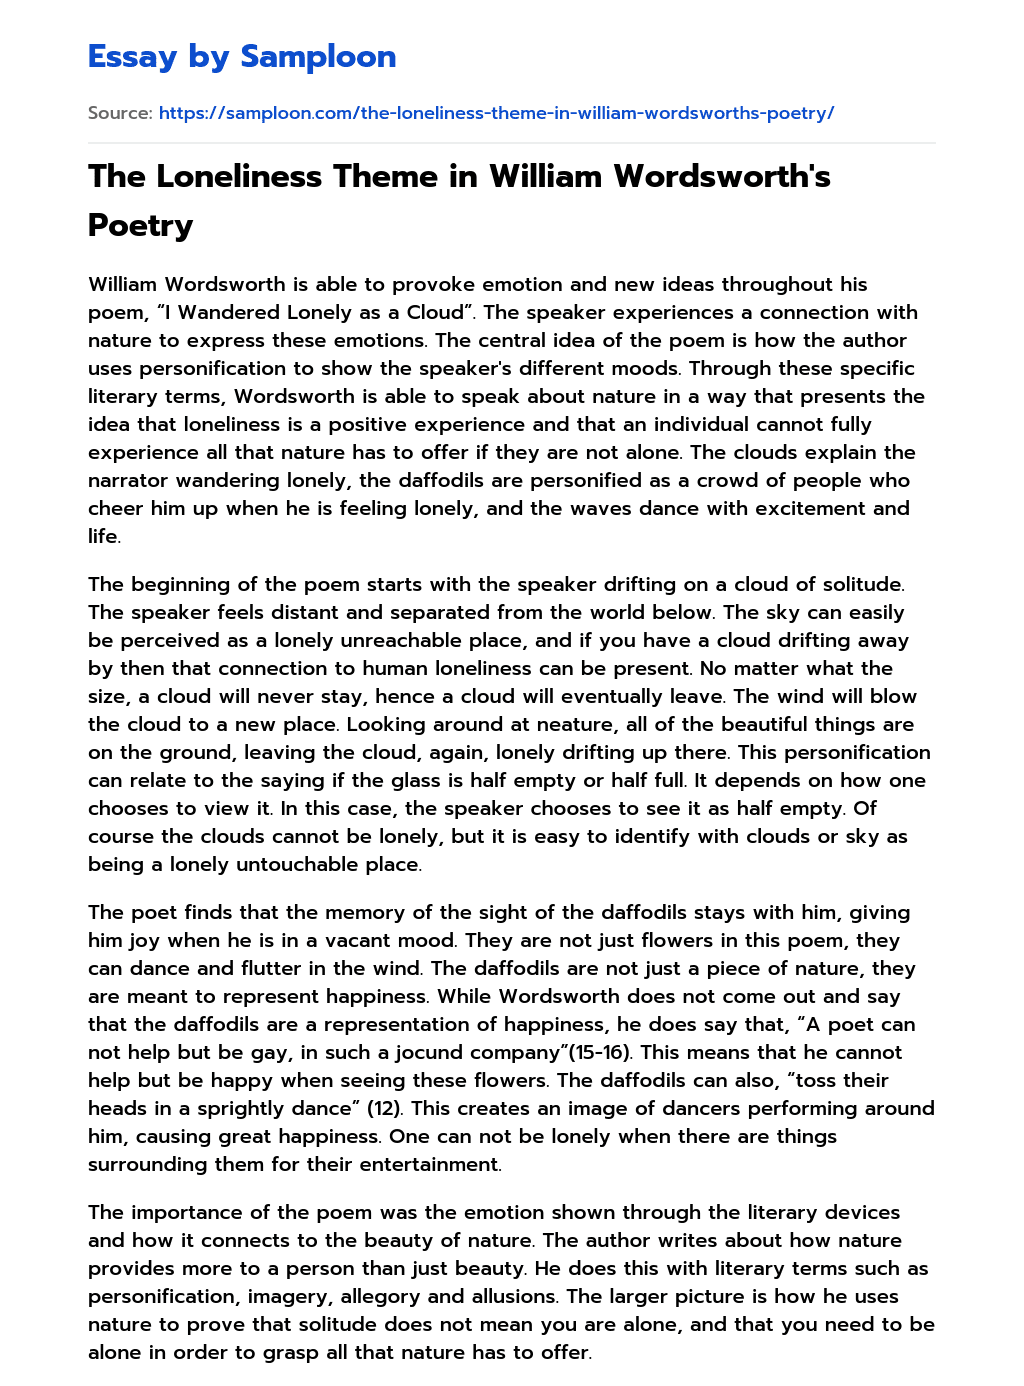 The Loneliness Theme in William Wordsworth’s Poetry essay